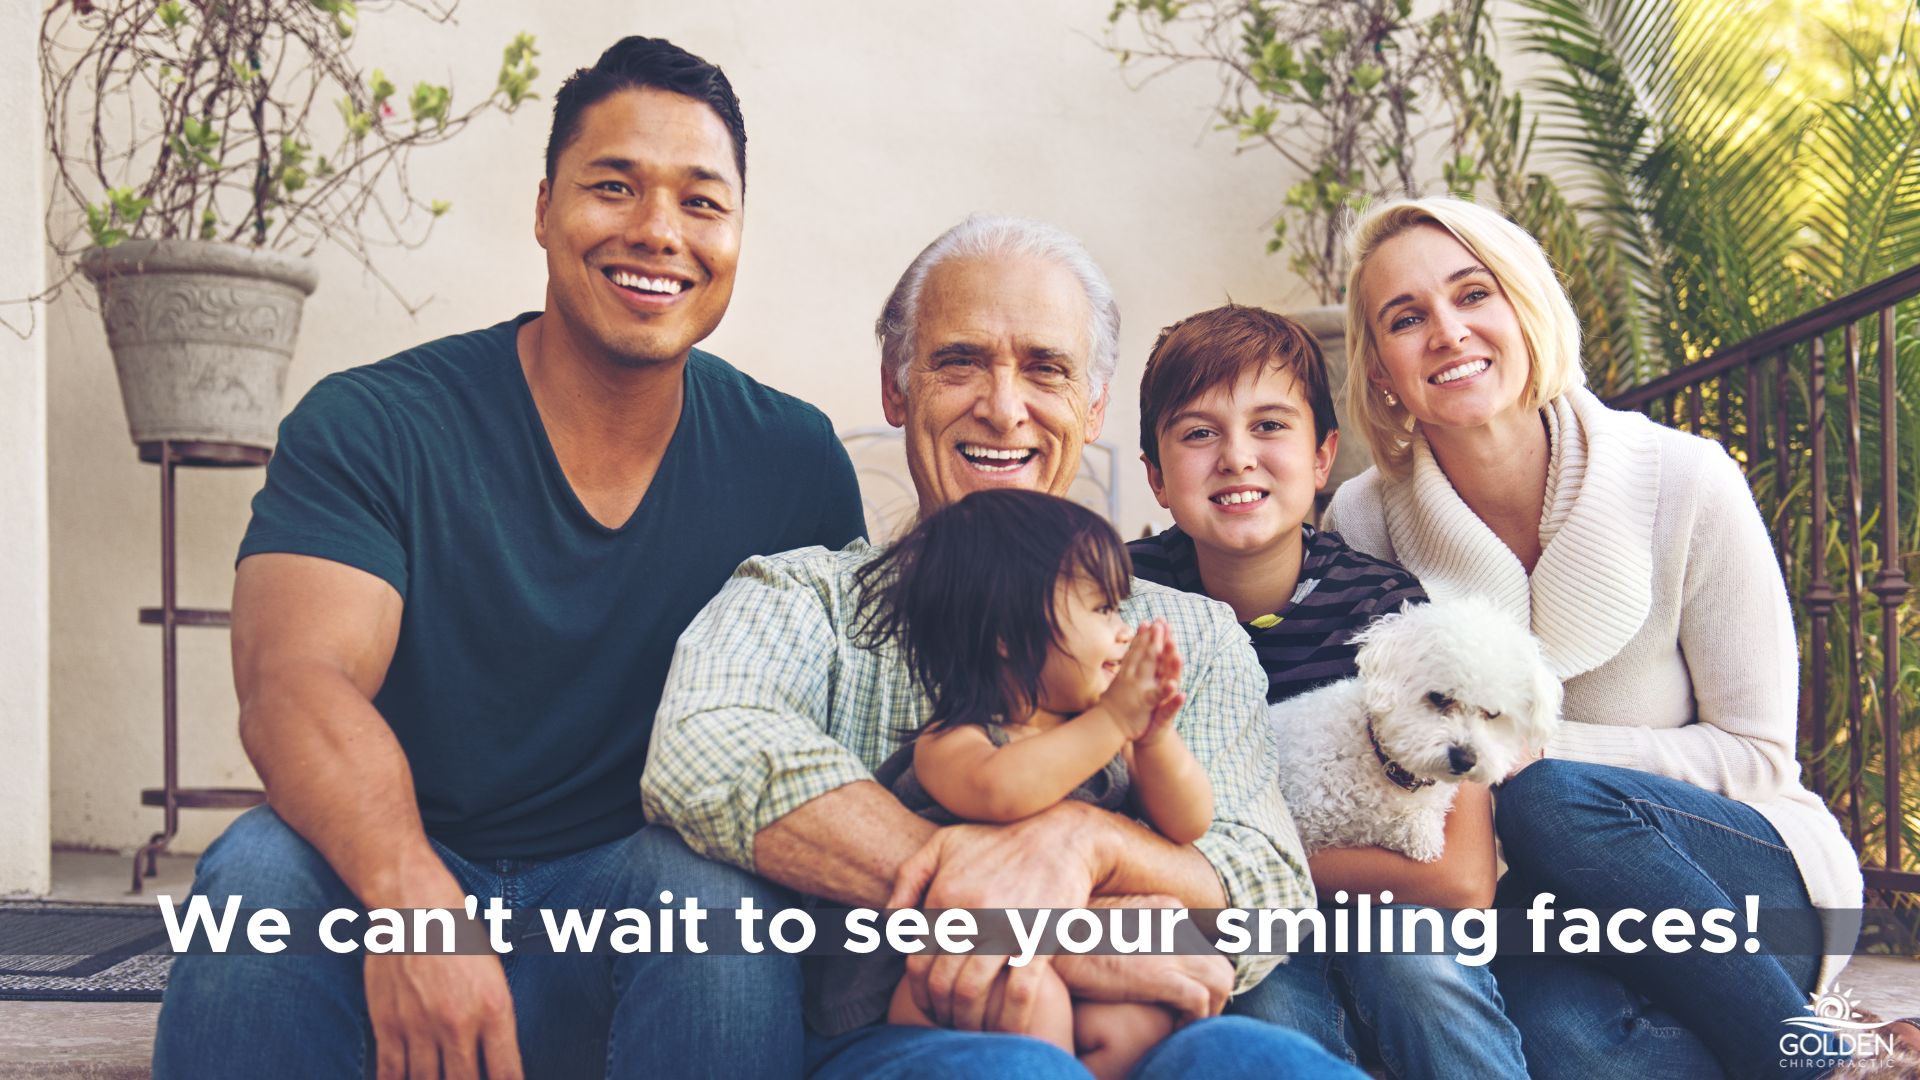 mixed race multigenerational family smiling